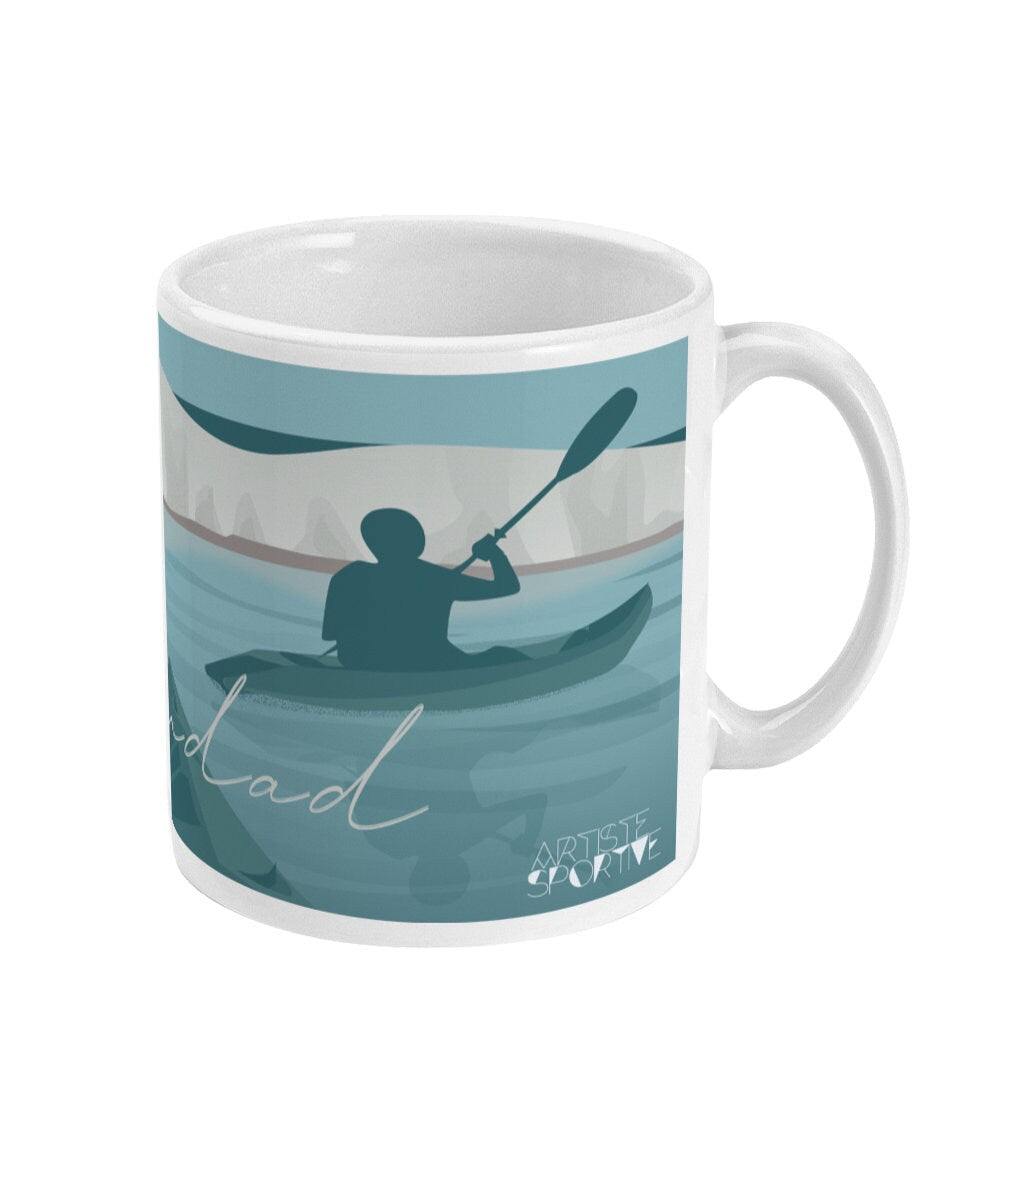 Canoe Kayak cup or mug "Walk at Beachy head" - Customizable